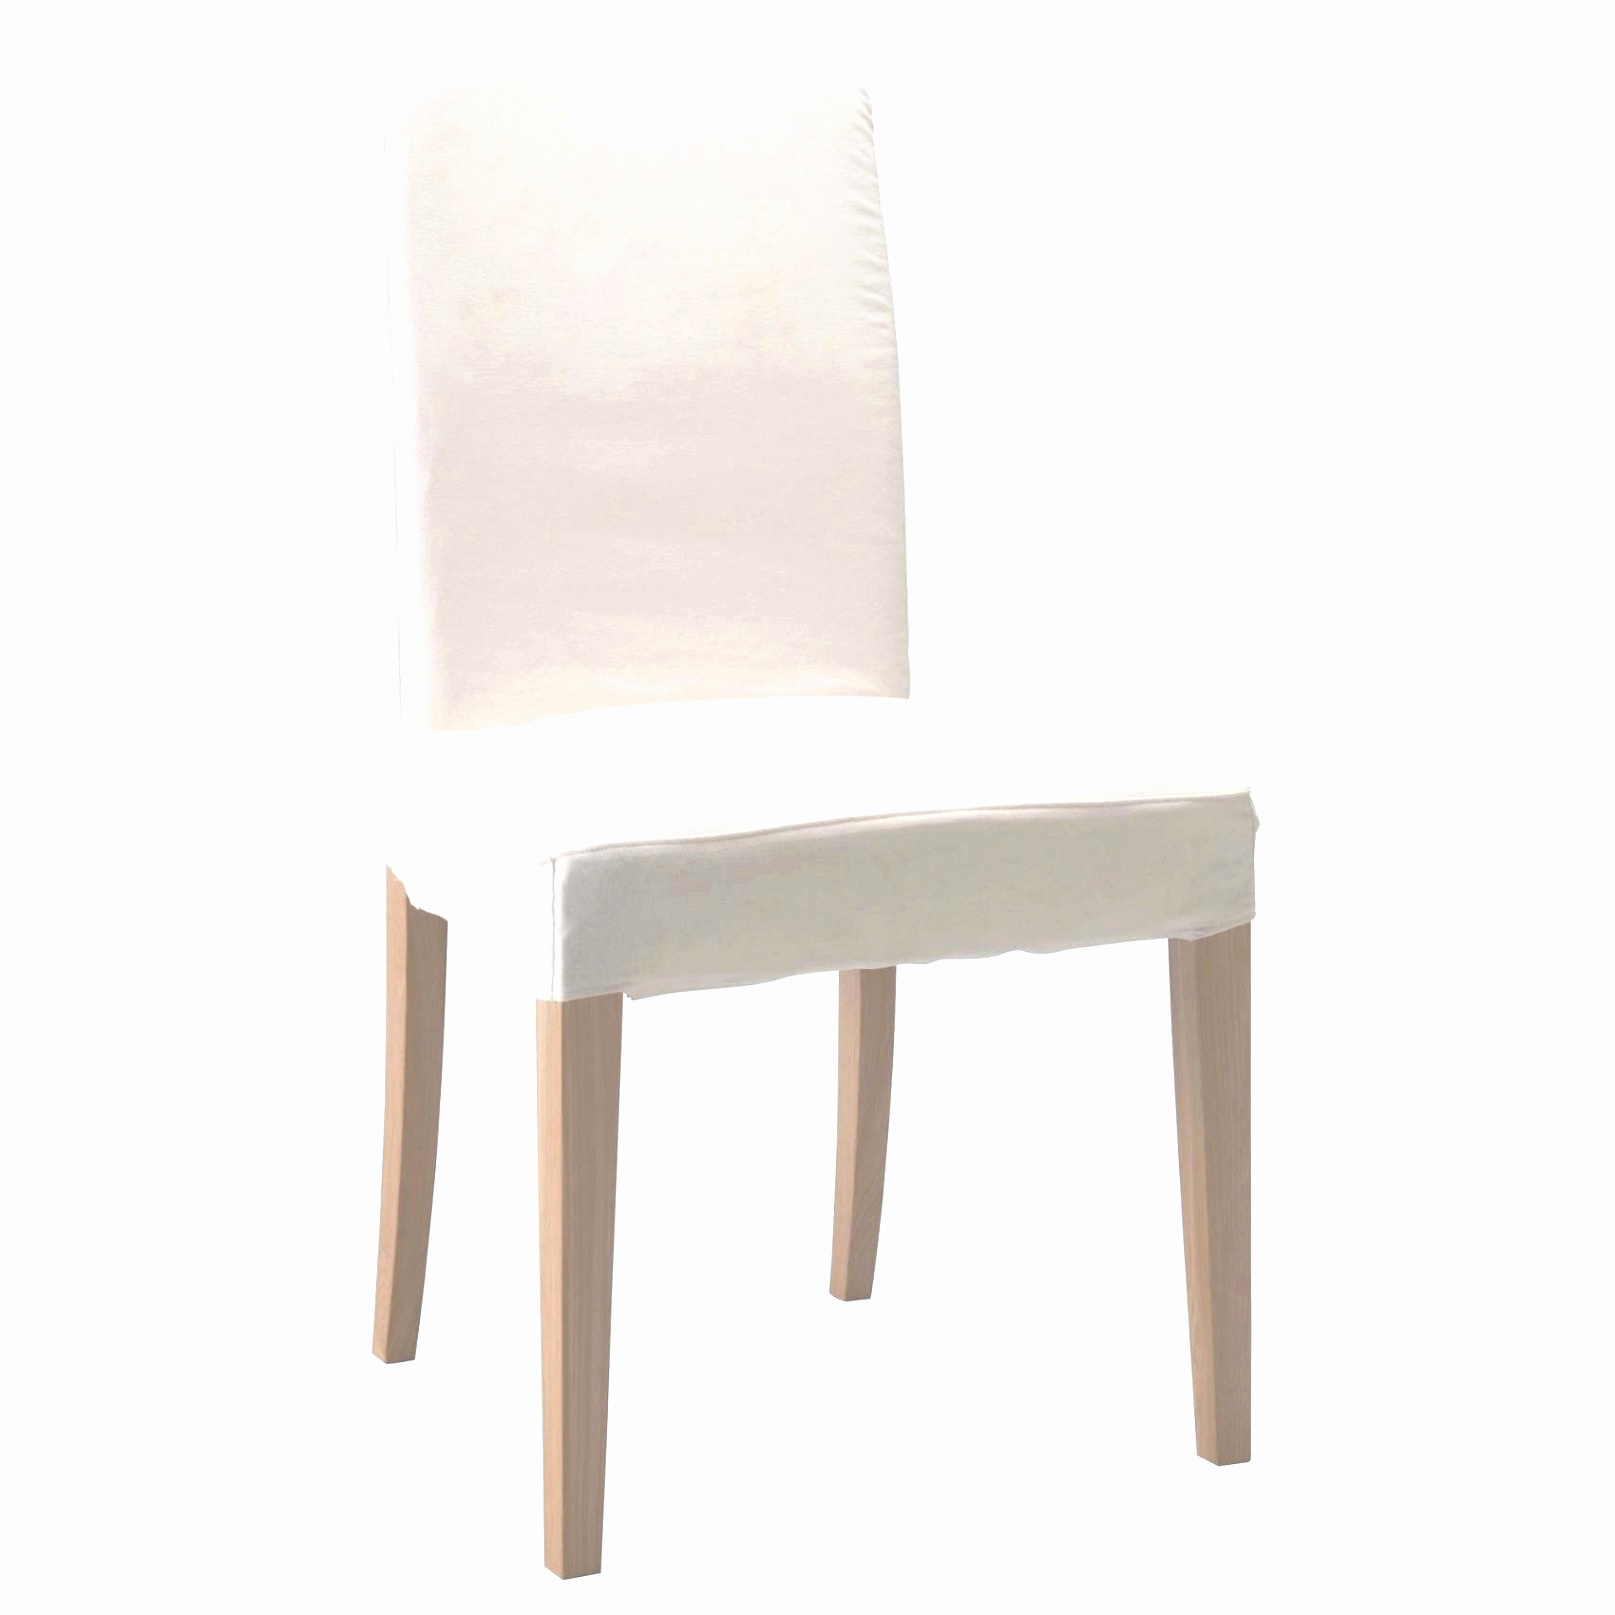 chaise de bar conforama photo de captivant chaise haute de bar conforama ou conforama chaise haute of chaise de bar conforama